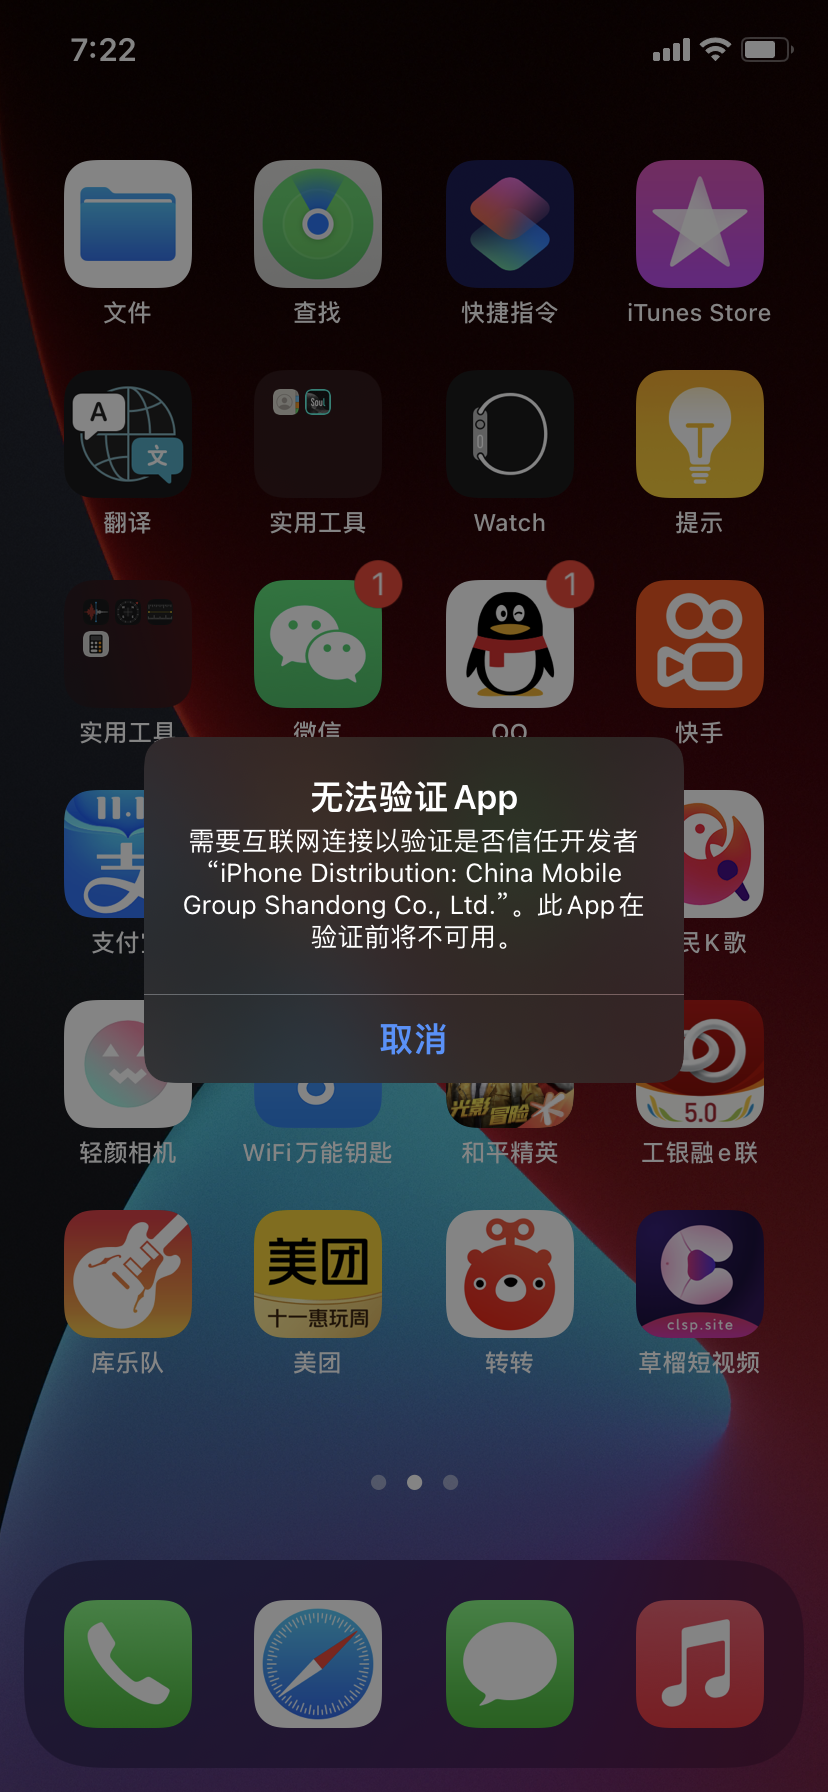 app下载后显示已验证信任后也无法打开app